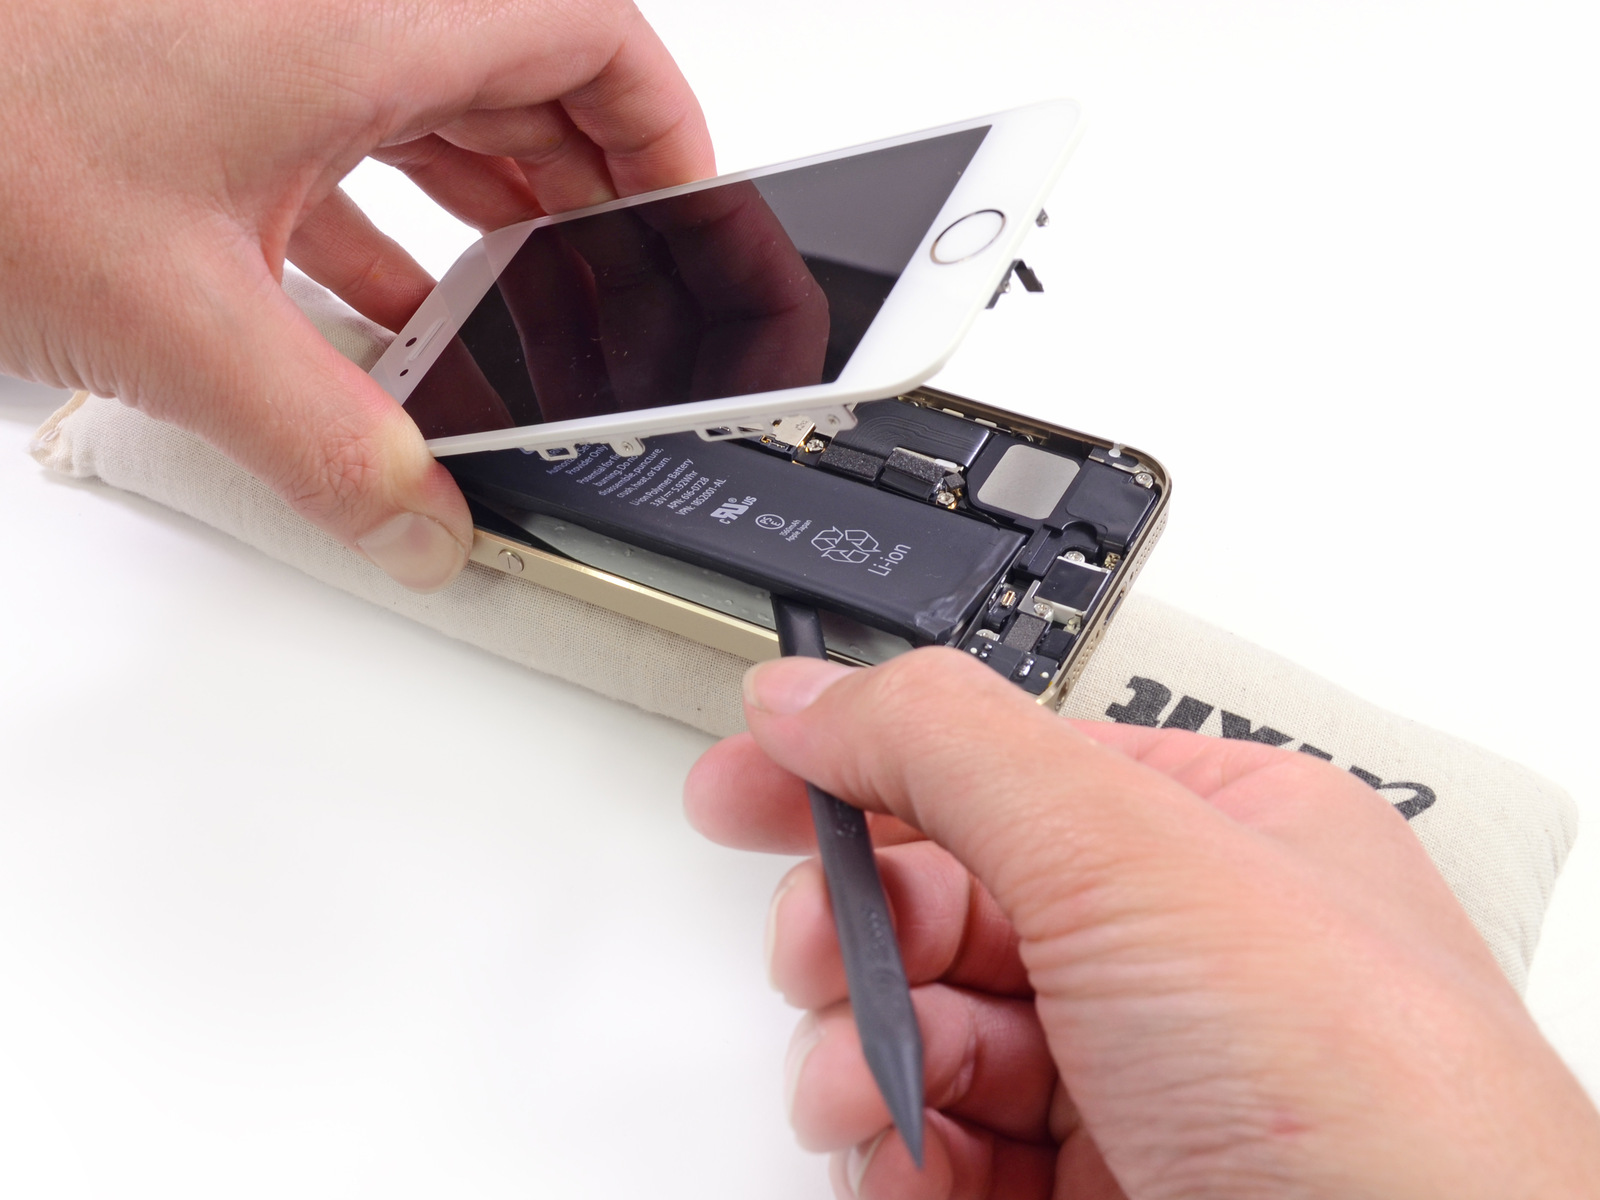 Desmontagem do iPhone 5s dourado - iFixit